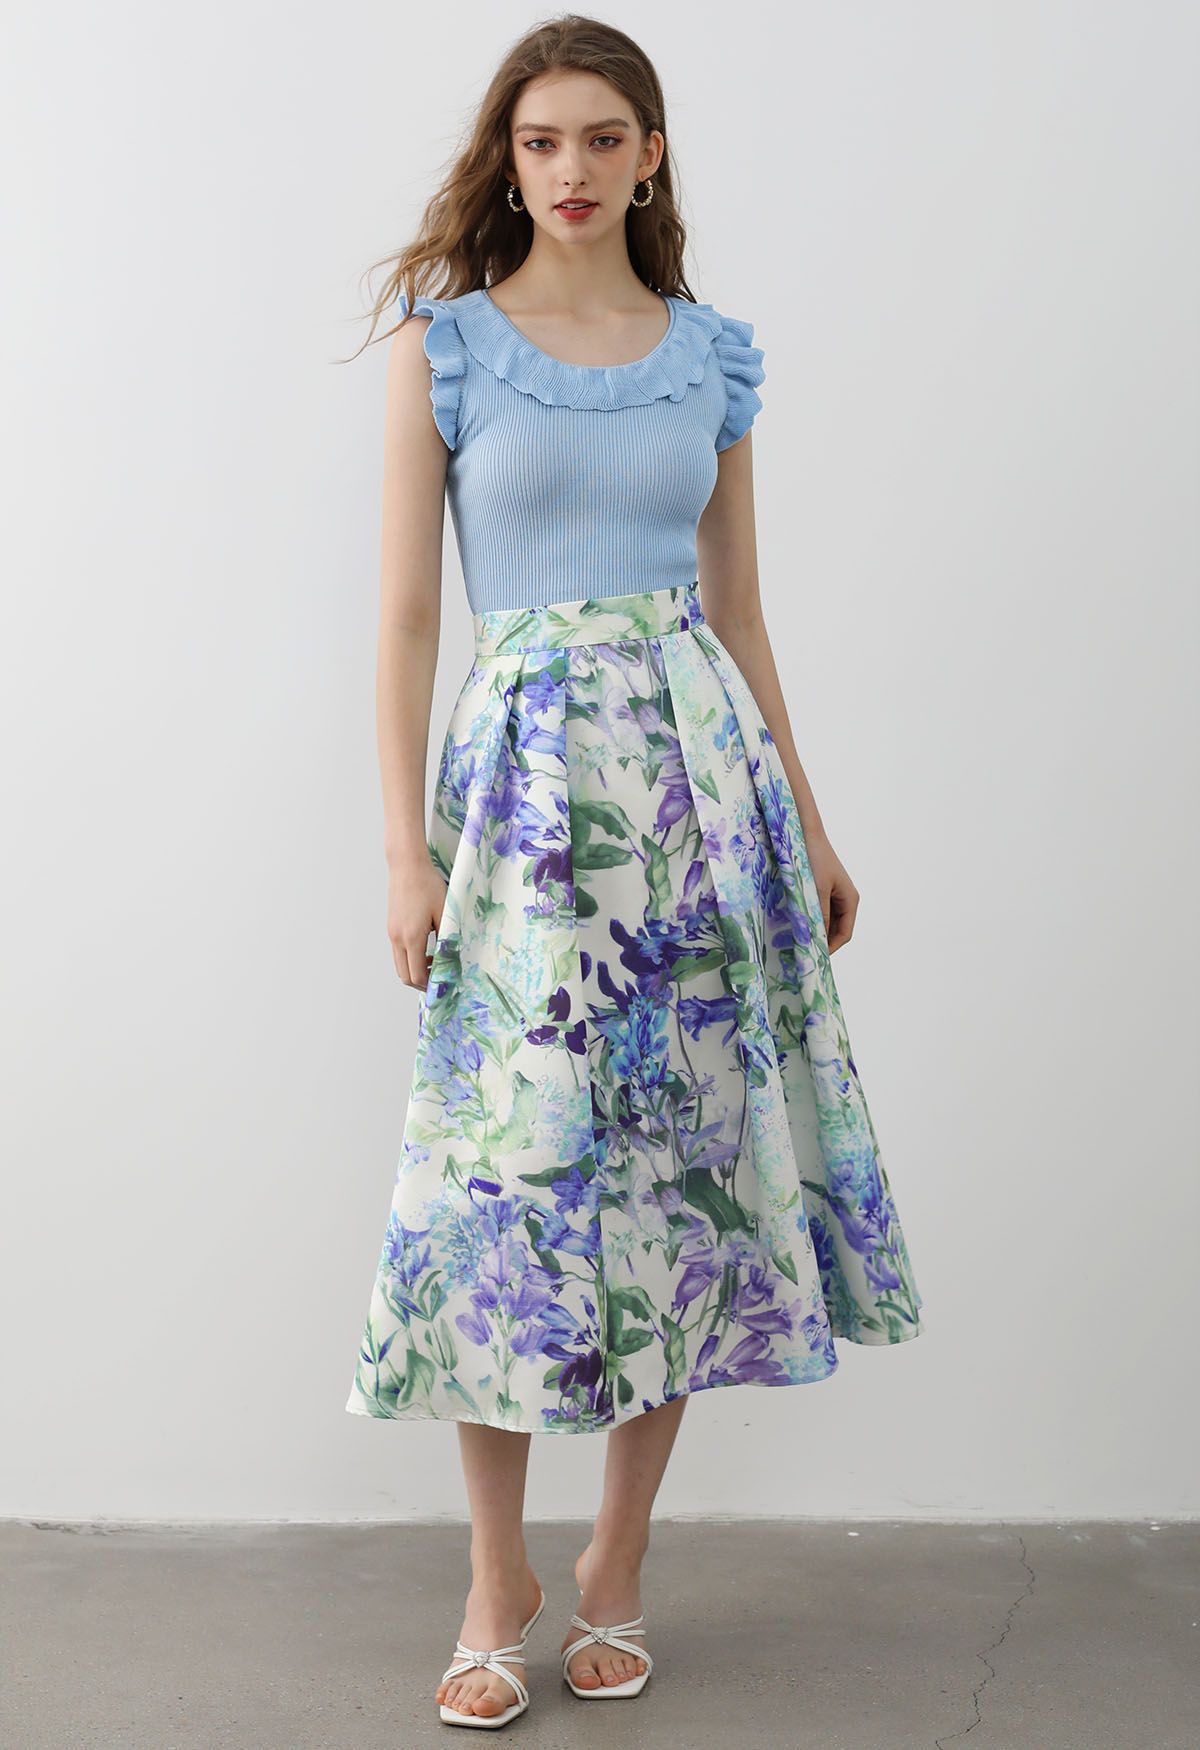 Charismatic Blue Blossom Pleated Midi Skirt